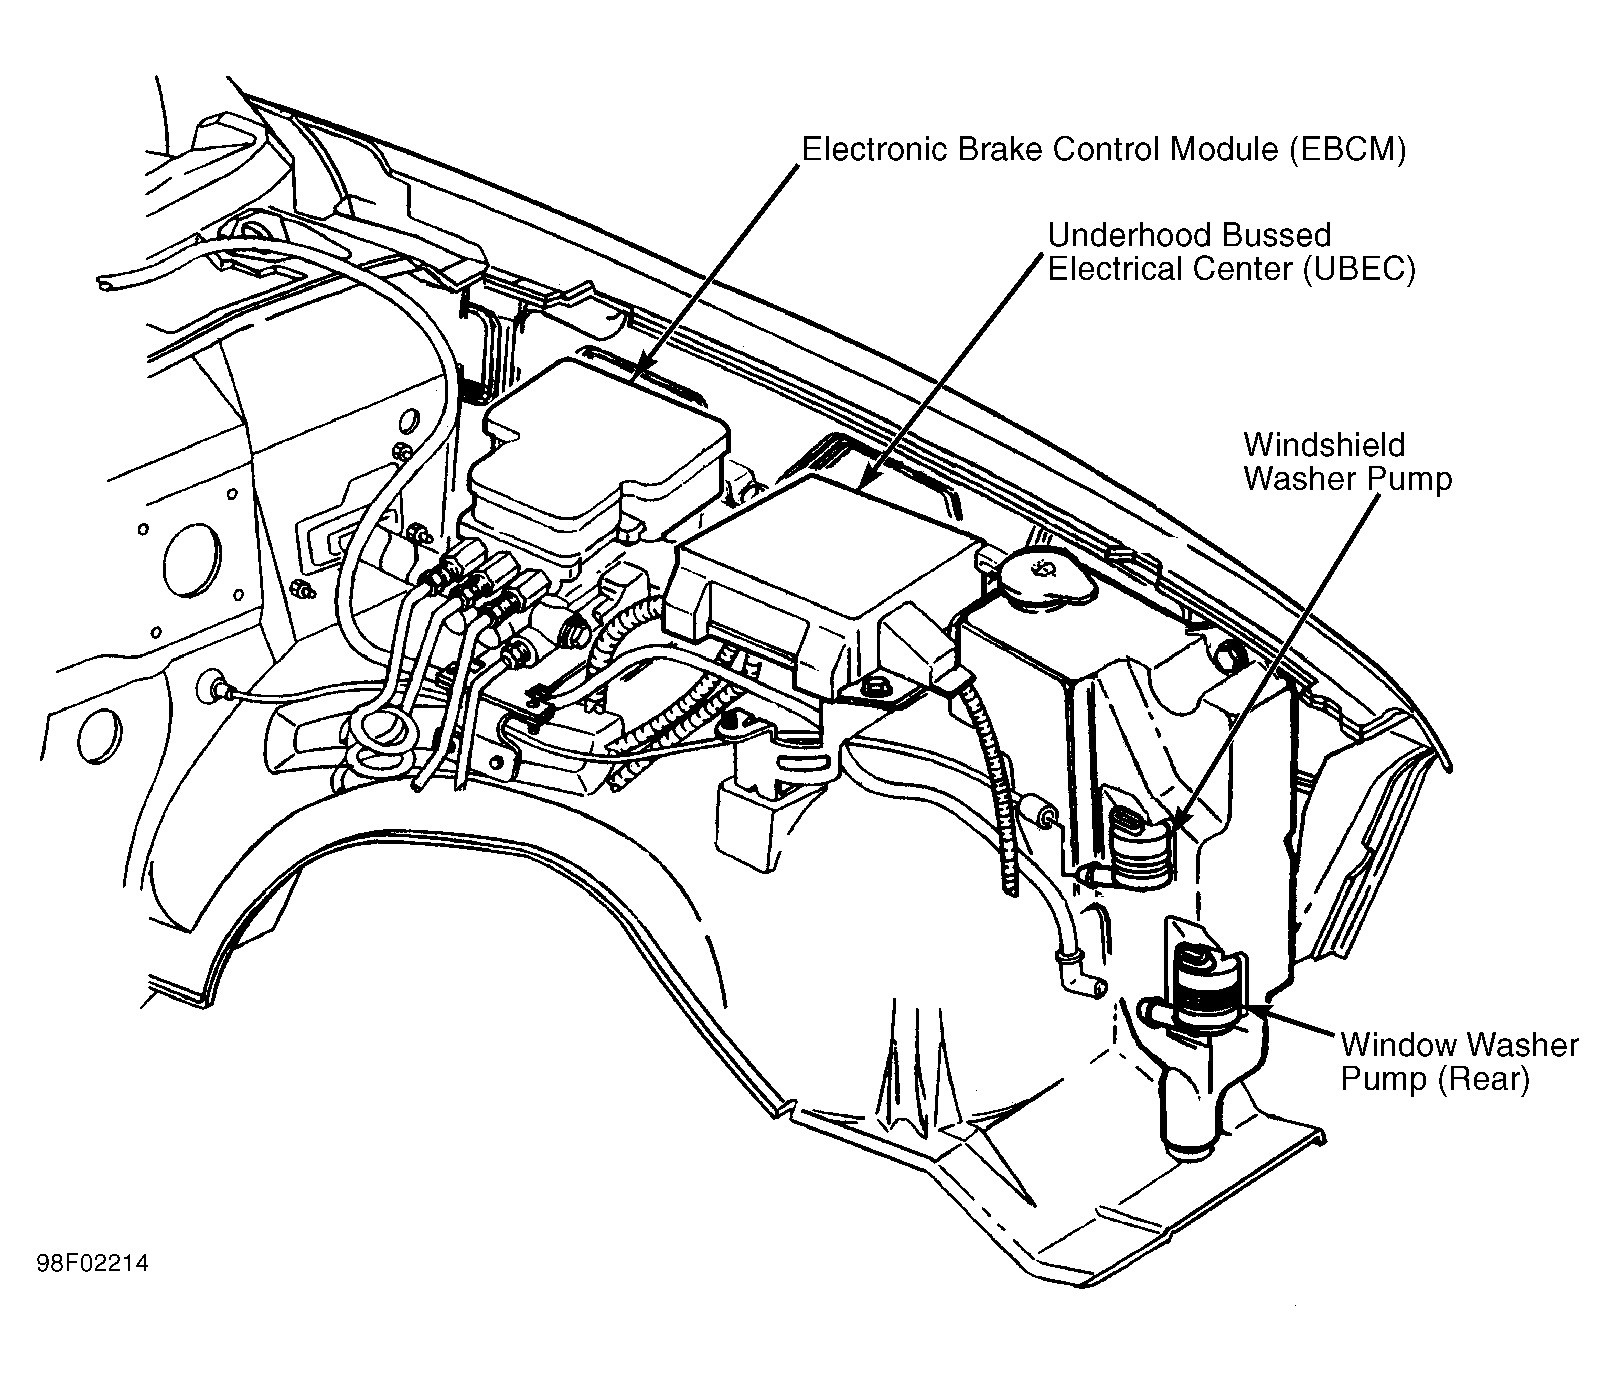 2002 Gmc sonoma Engine Diagram 2001 Gmc sonoma Wiring Diagram Experts Wiring Diagram • Of 2002 Gmc sonoma Engine Diagram